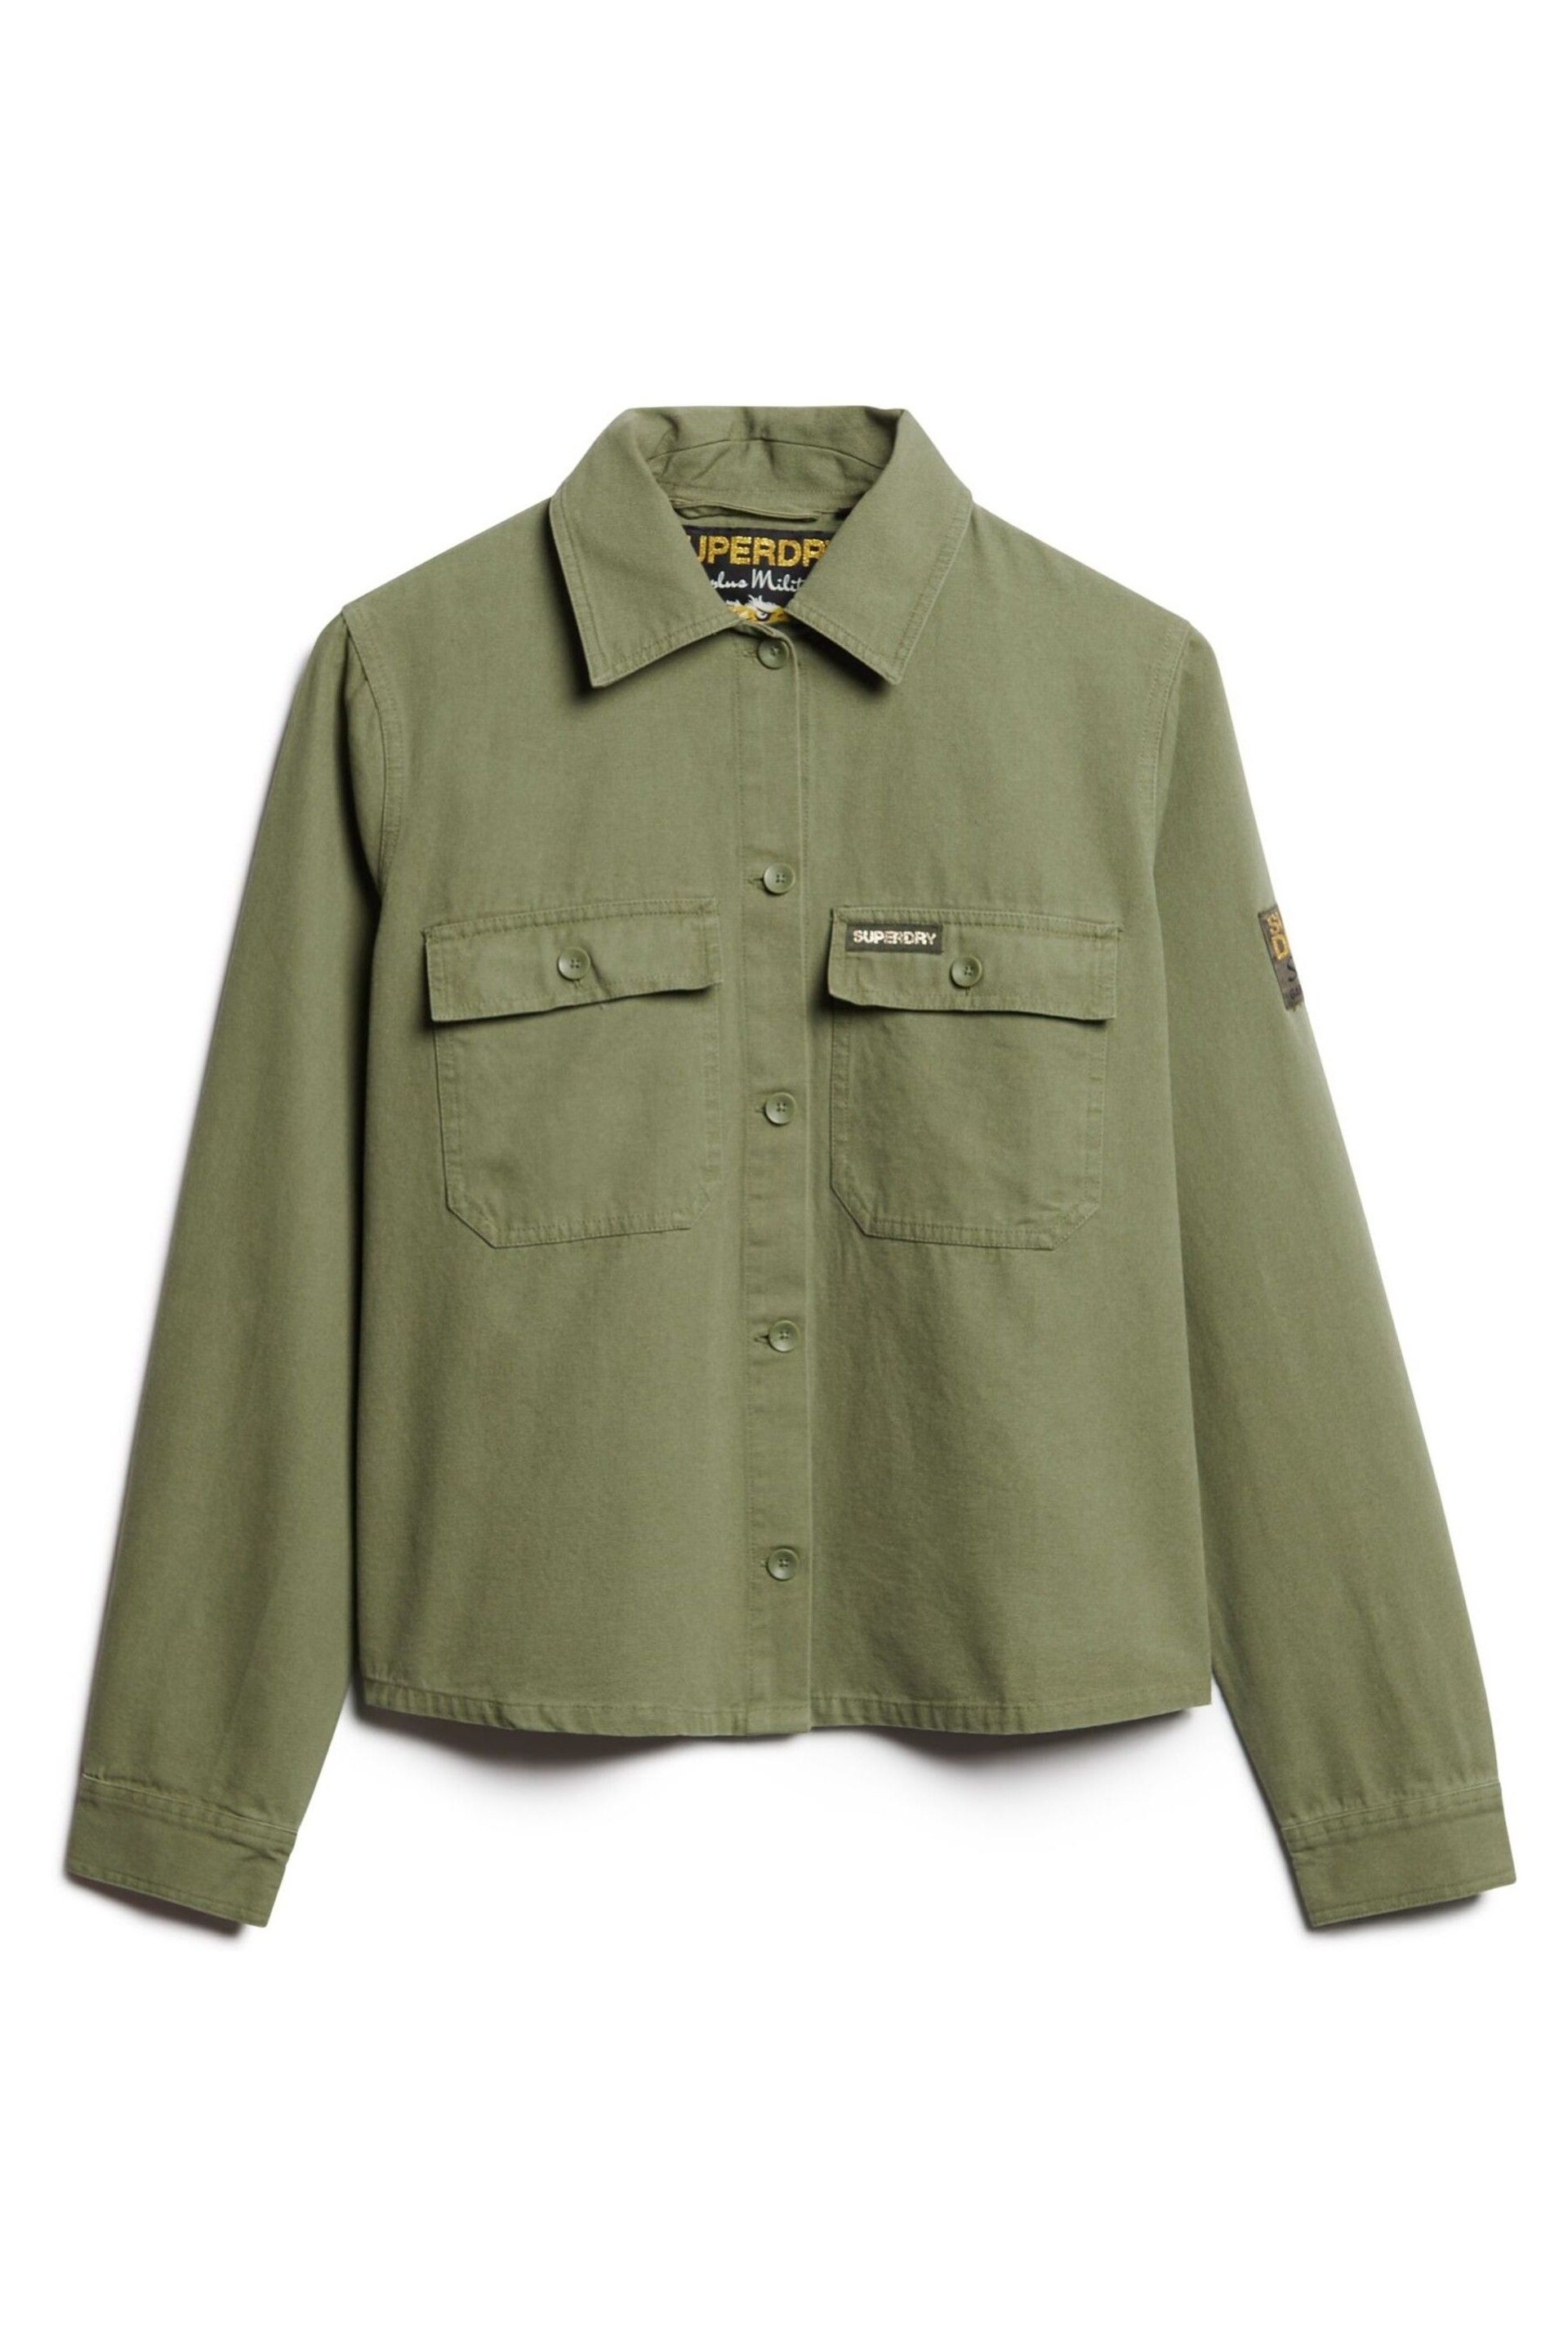 Superdry Green Embellished Military Jacket - Image 4 of 6